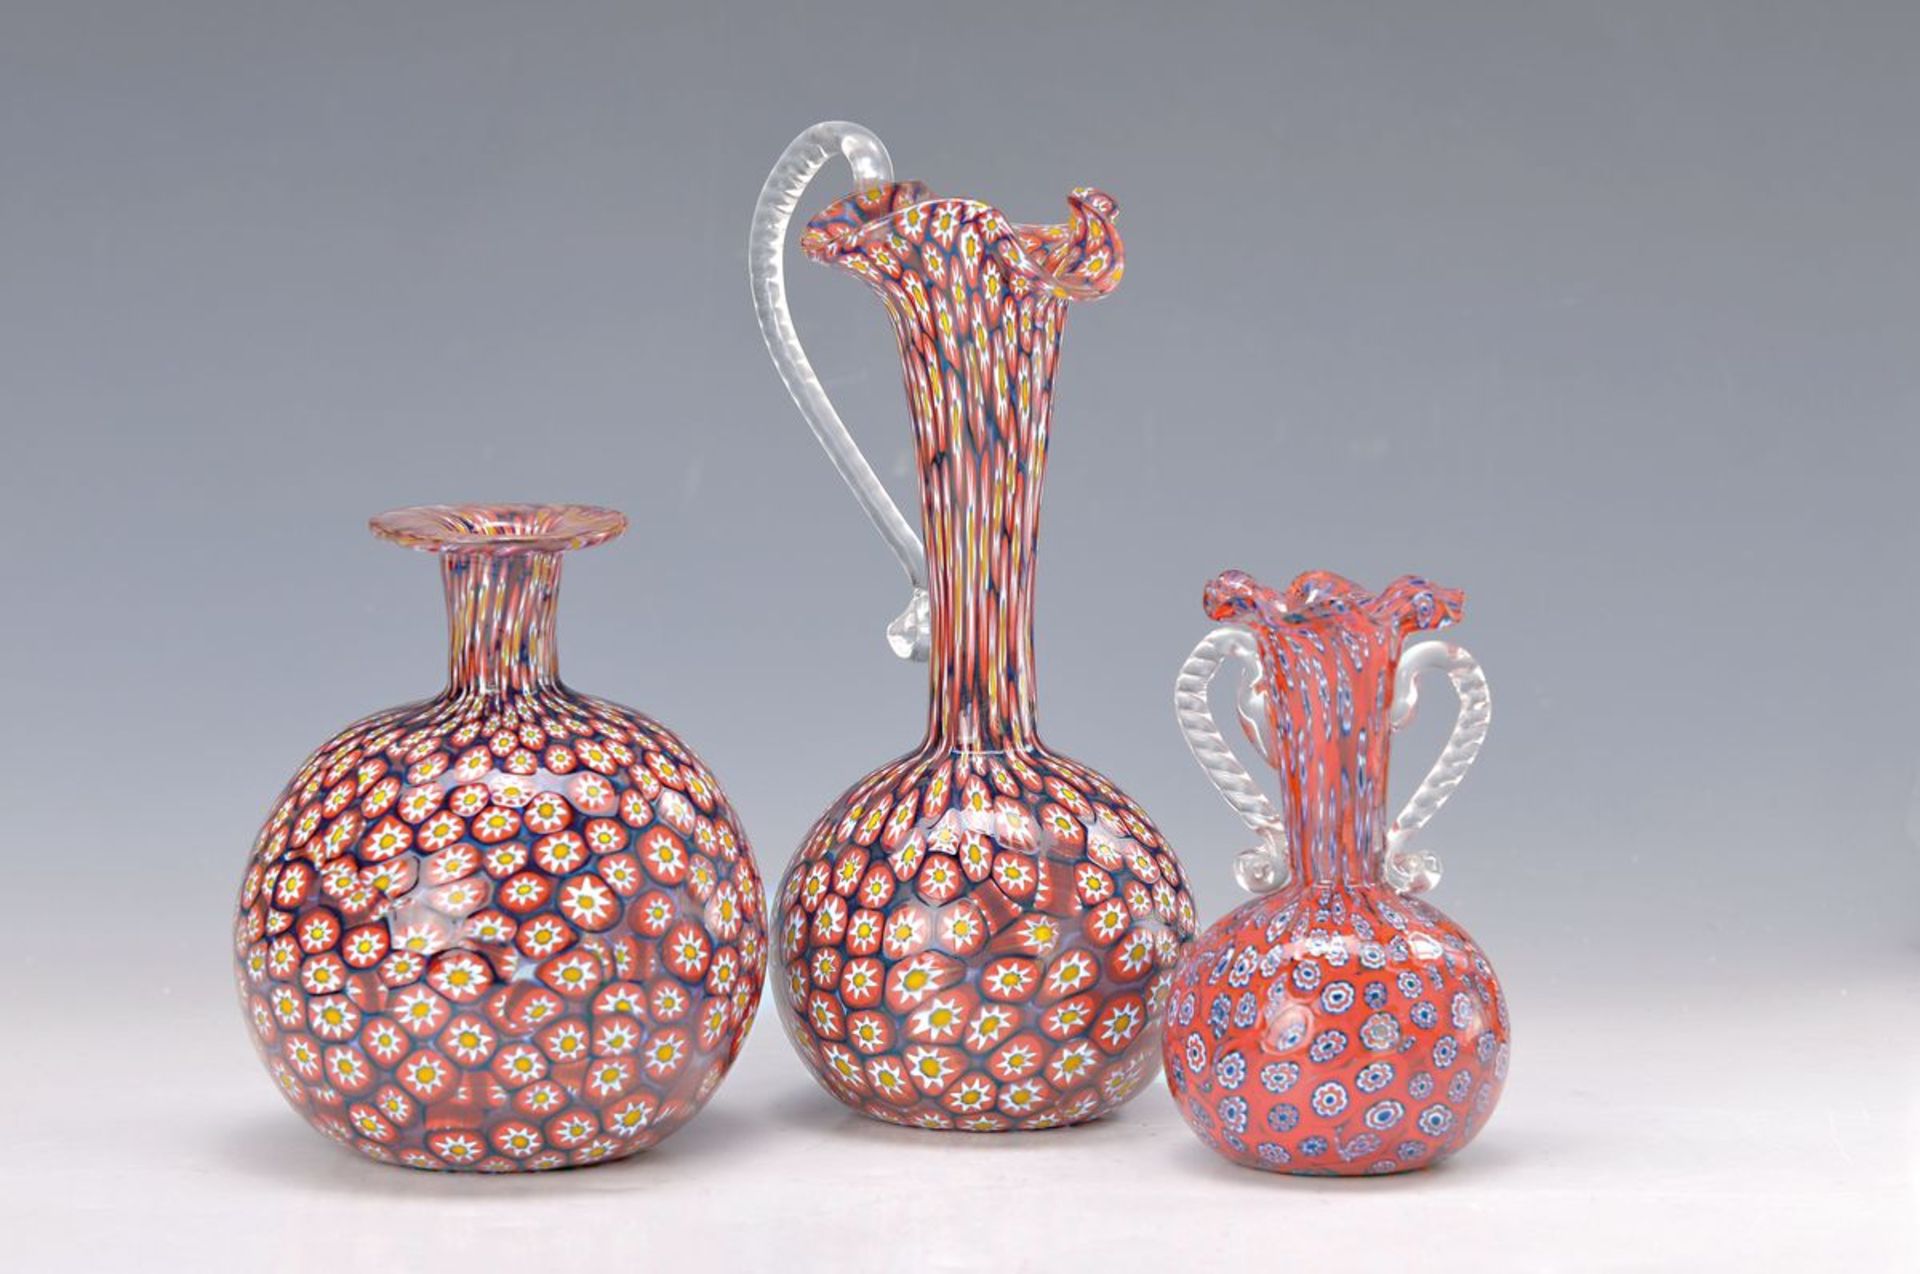 3 Vasen, Murano Italien, 20. Jh., farbloses mundgeblasenes Glas mit eingeschmolzenen bunten mille